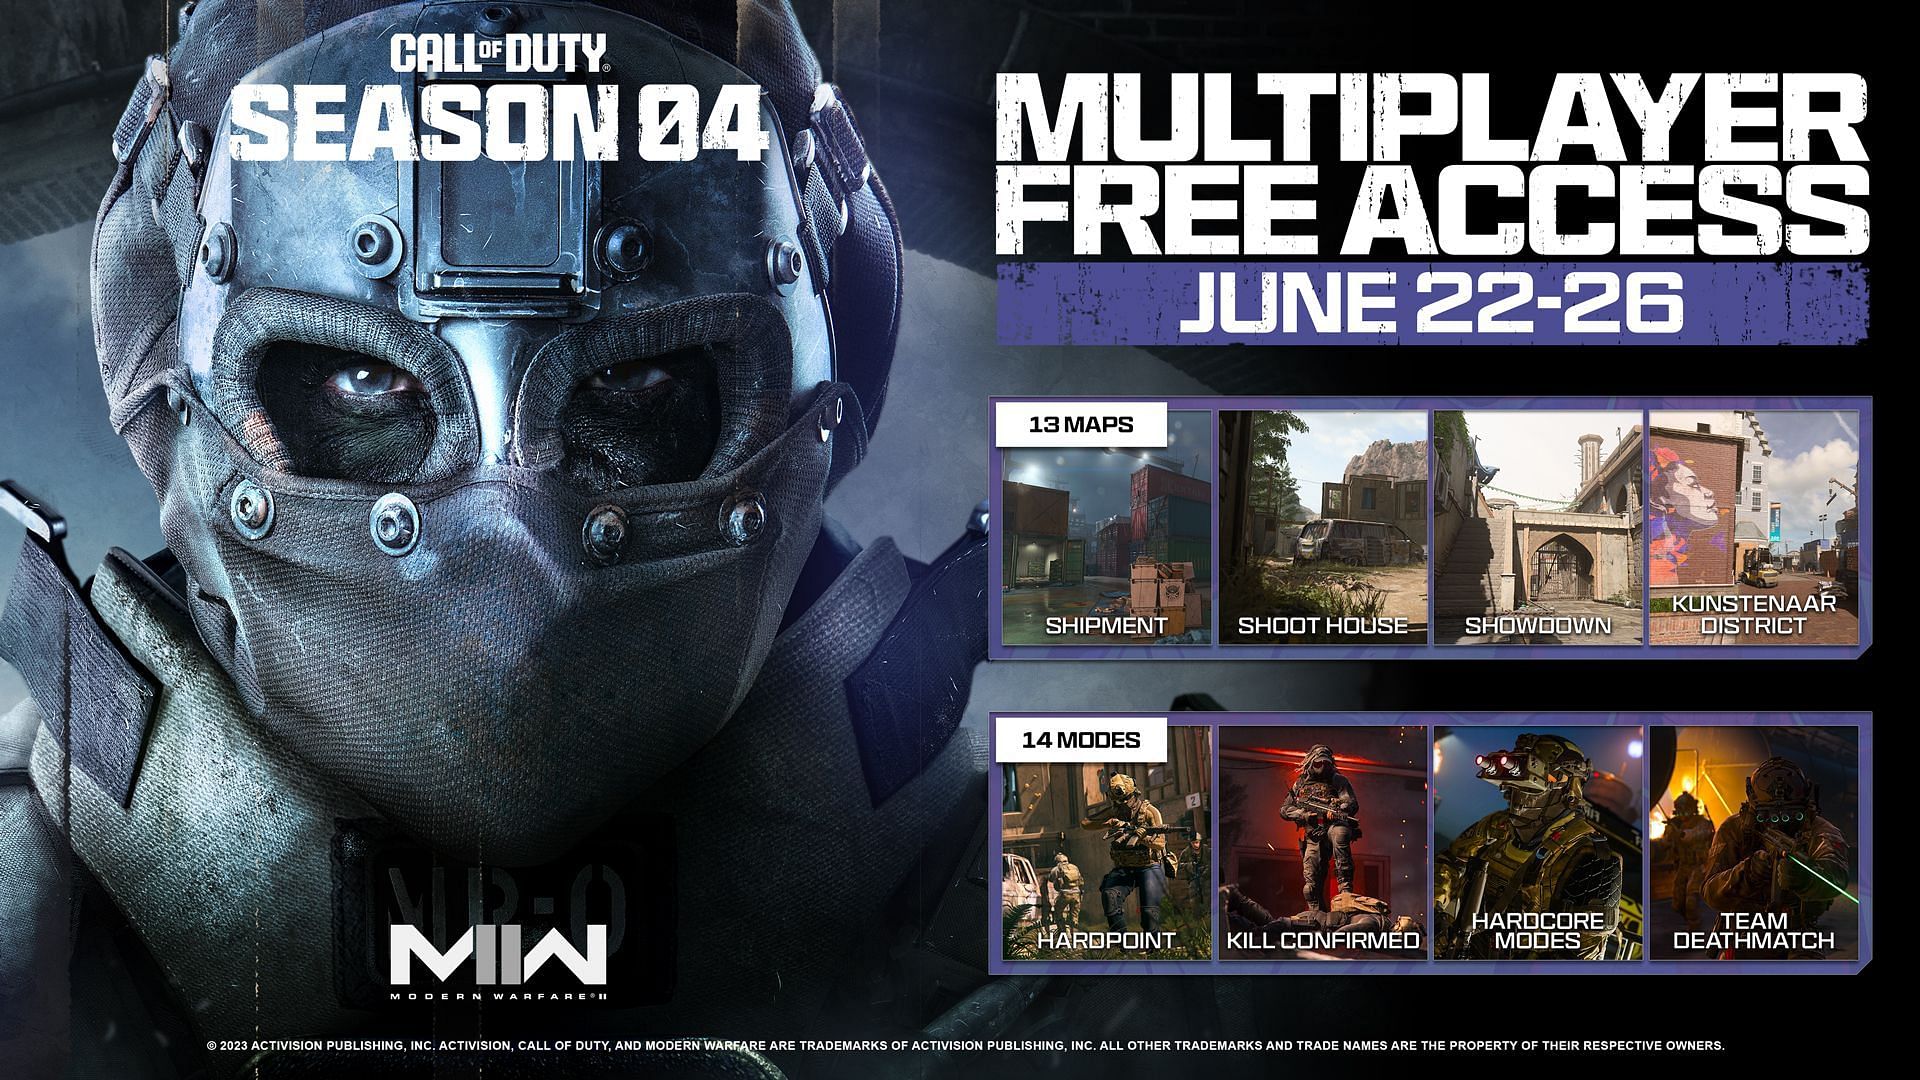 Free Play Days – Call of Duty Modern Warfare III (Multiplayer